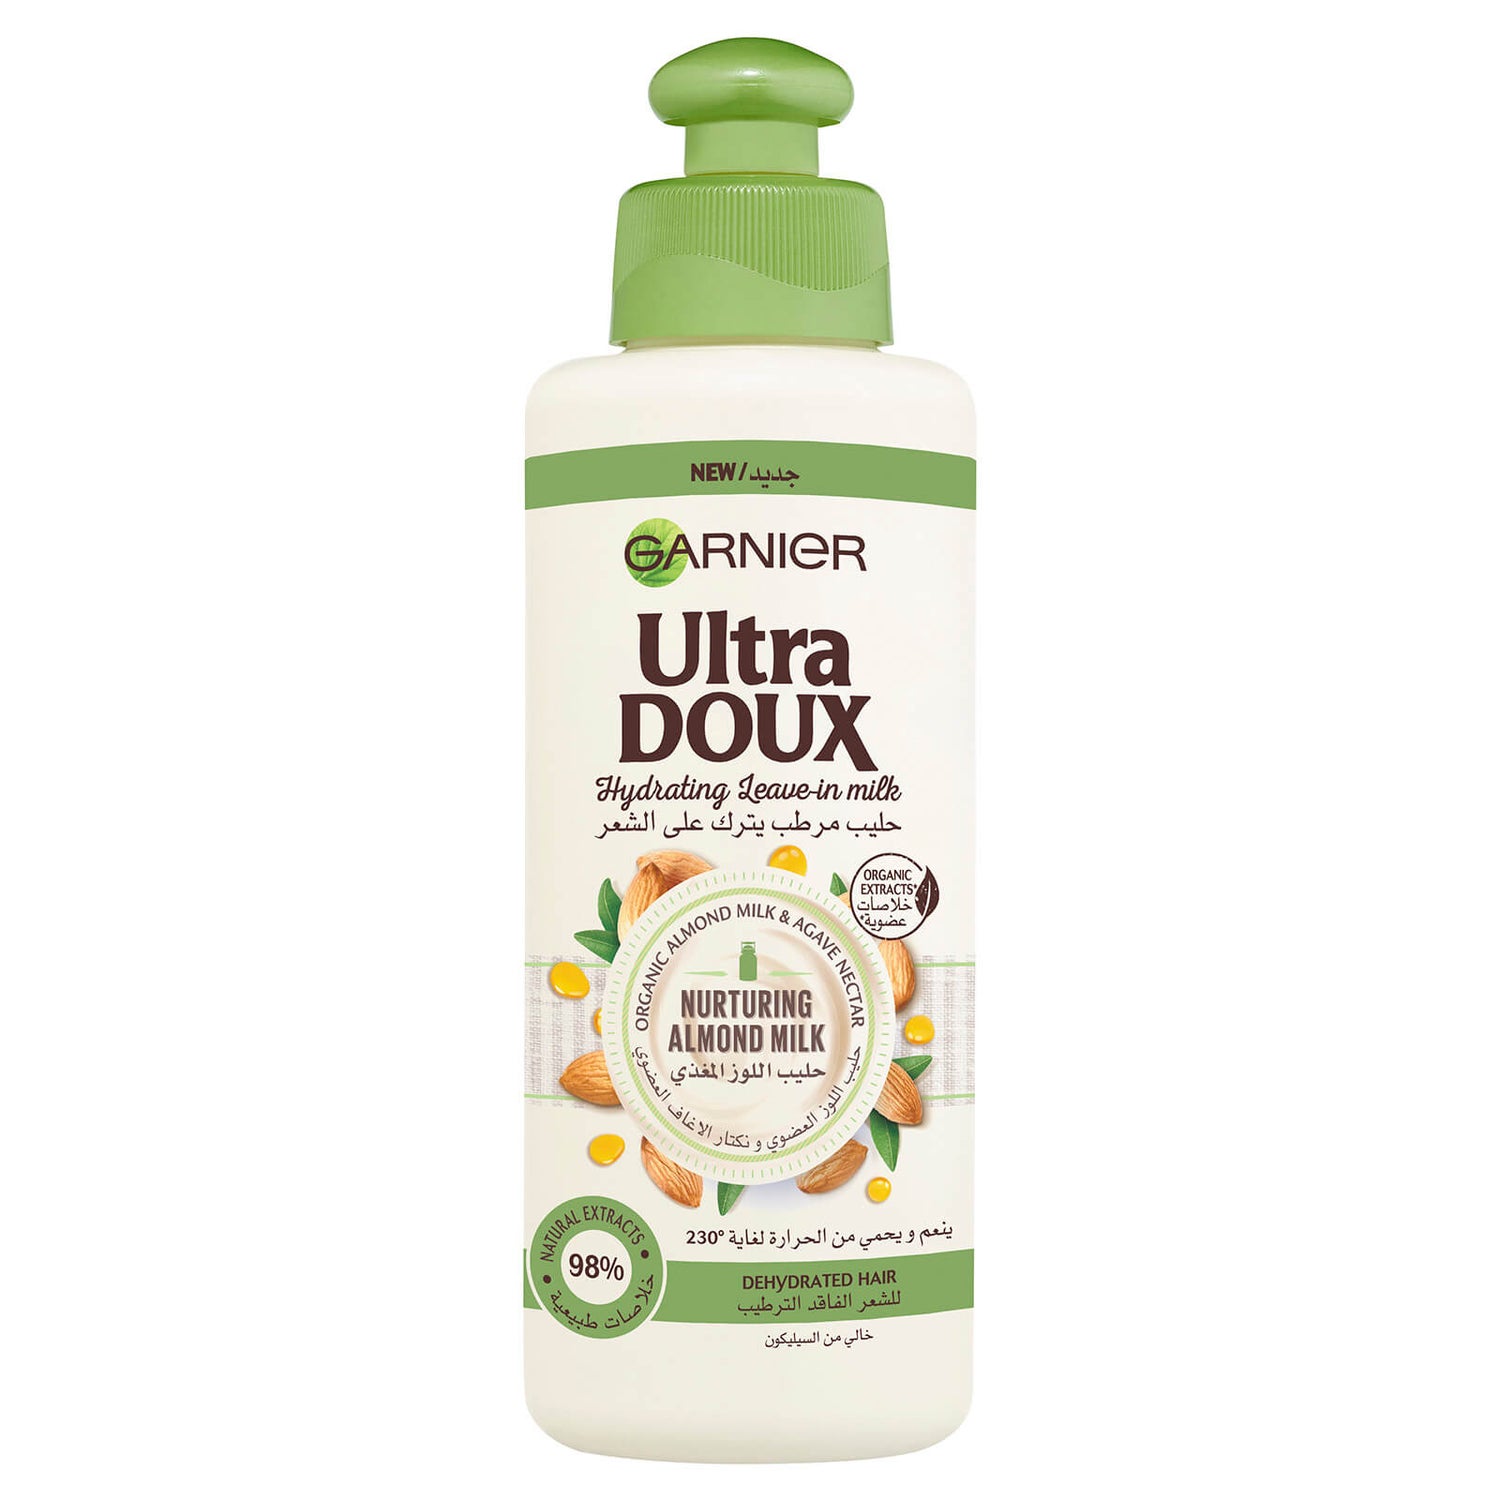 Garnier Ultra Doux Almond Milk Hydrating Leave-in Milk, 200ml